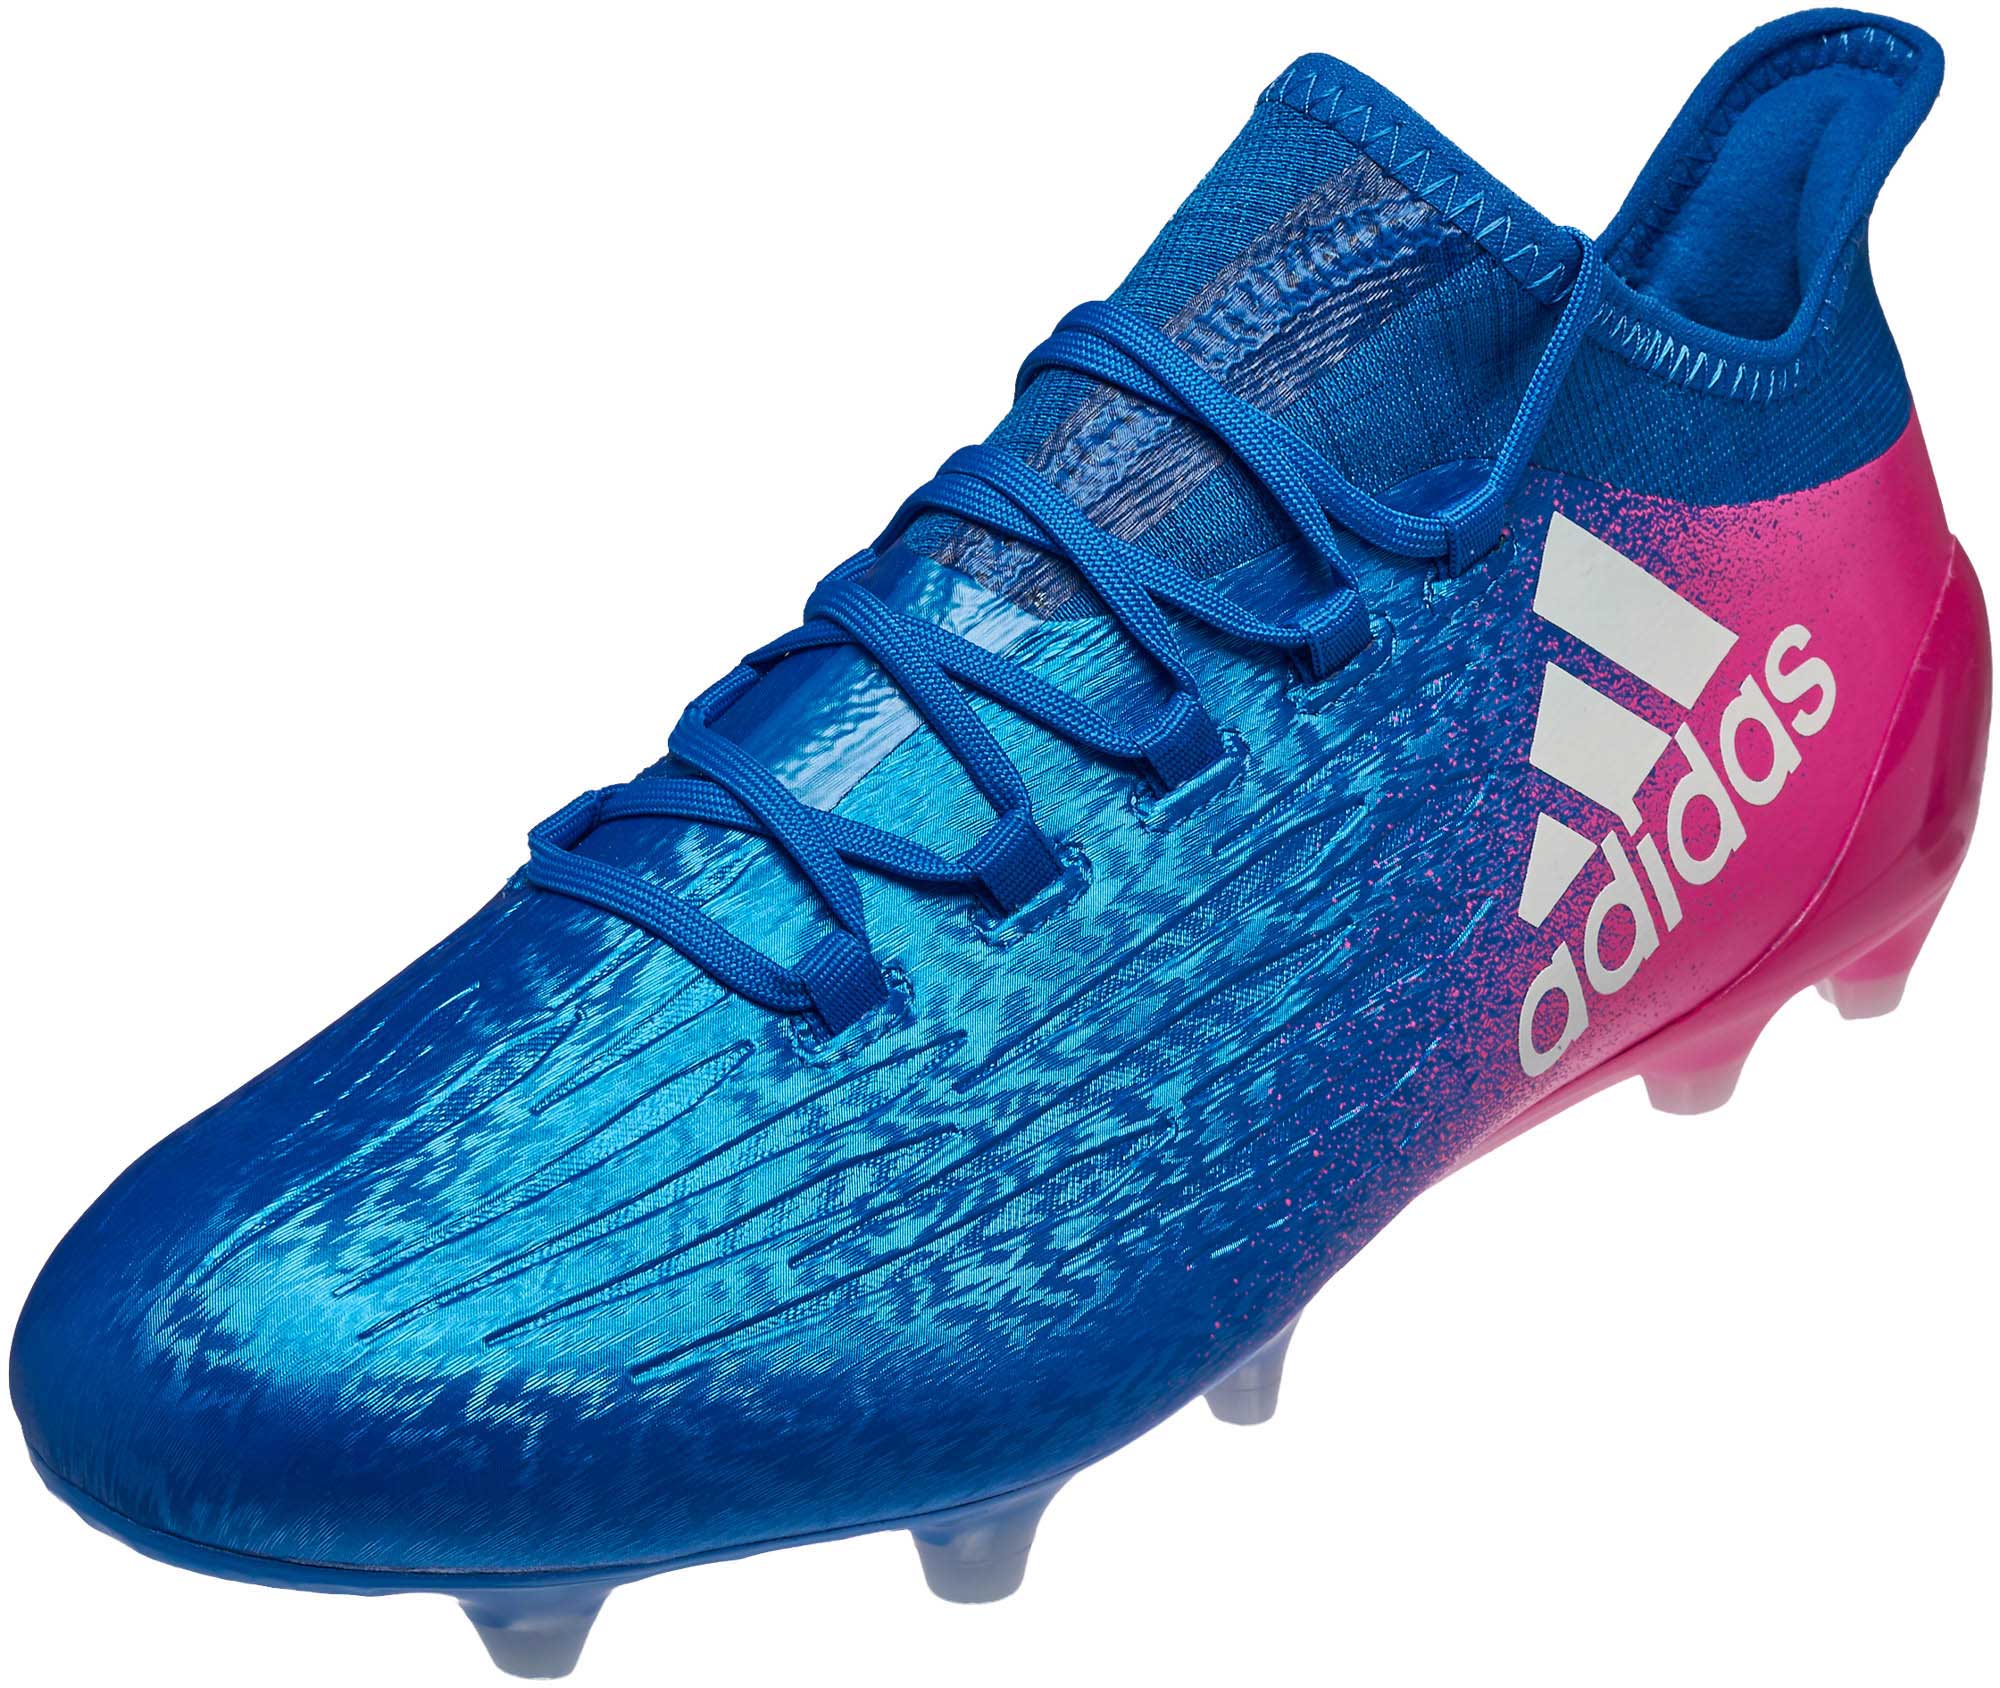 adidas sprintframe soccer boots